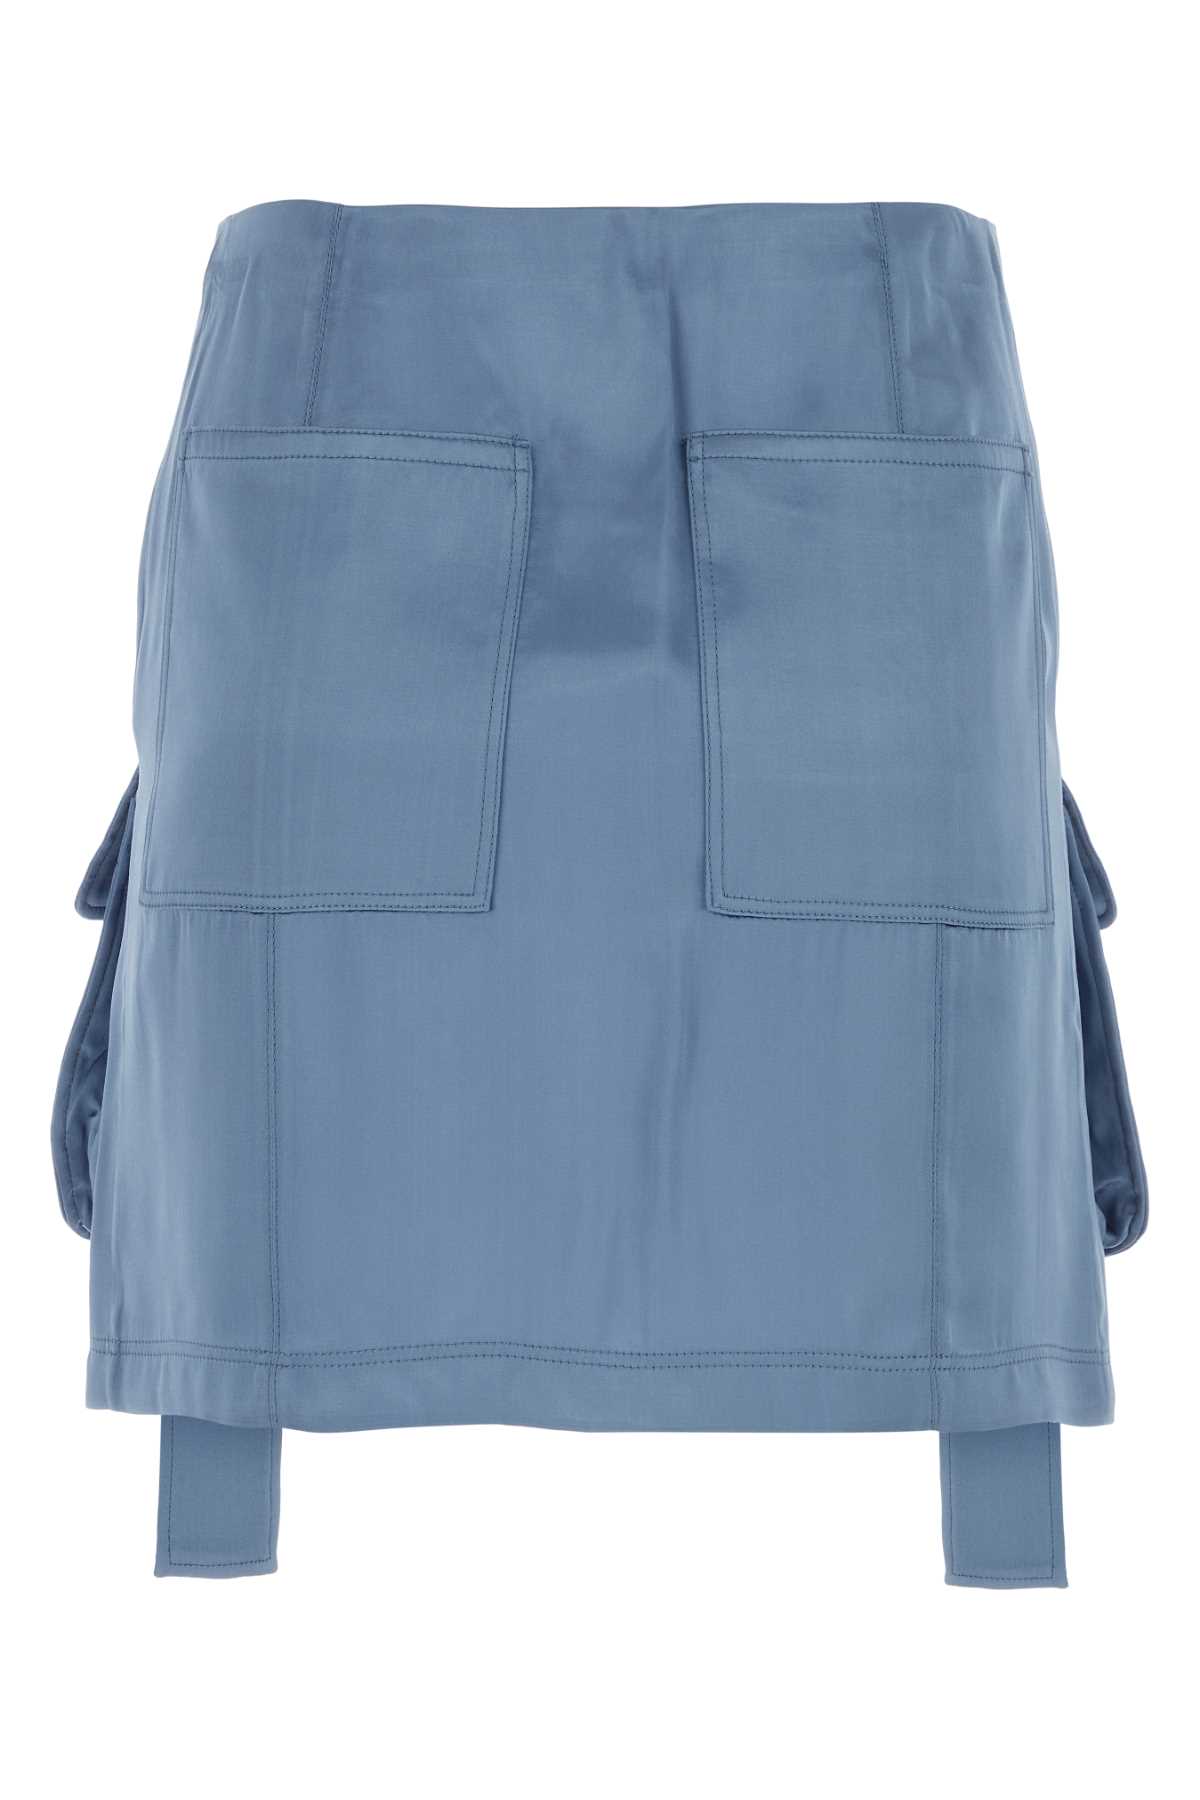 Fendi Cerulean Blue Satin Mini Skirt In Perfect